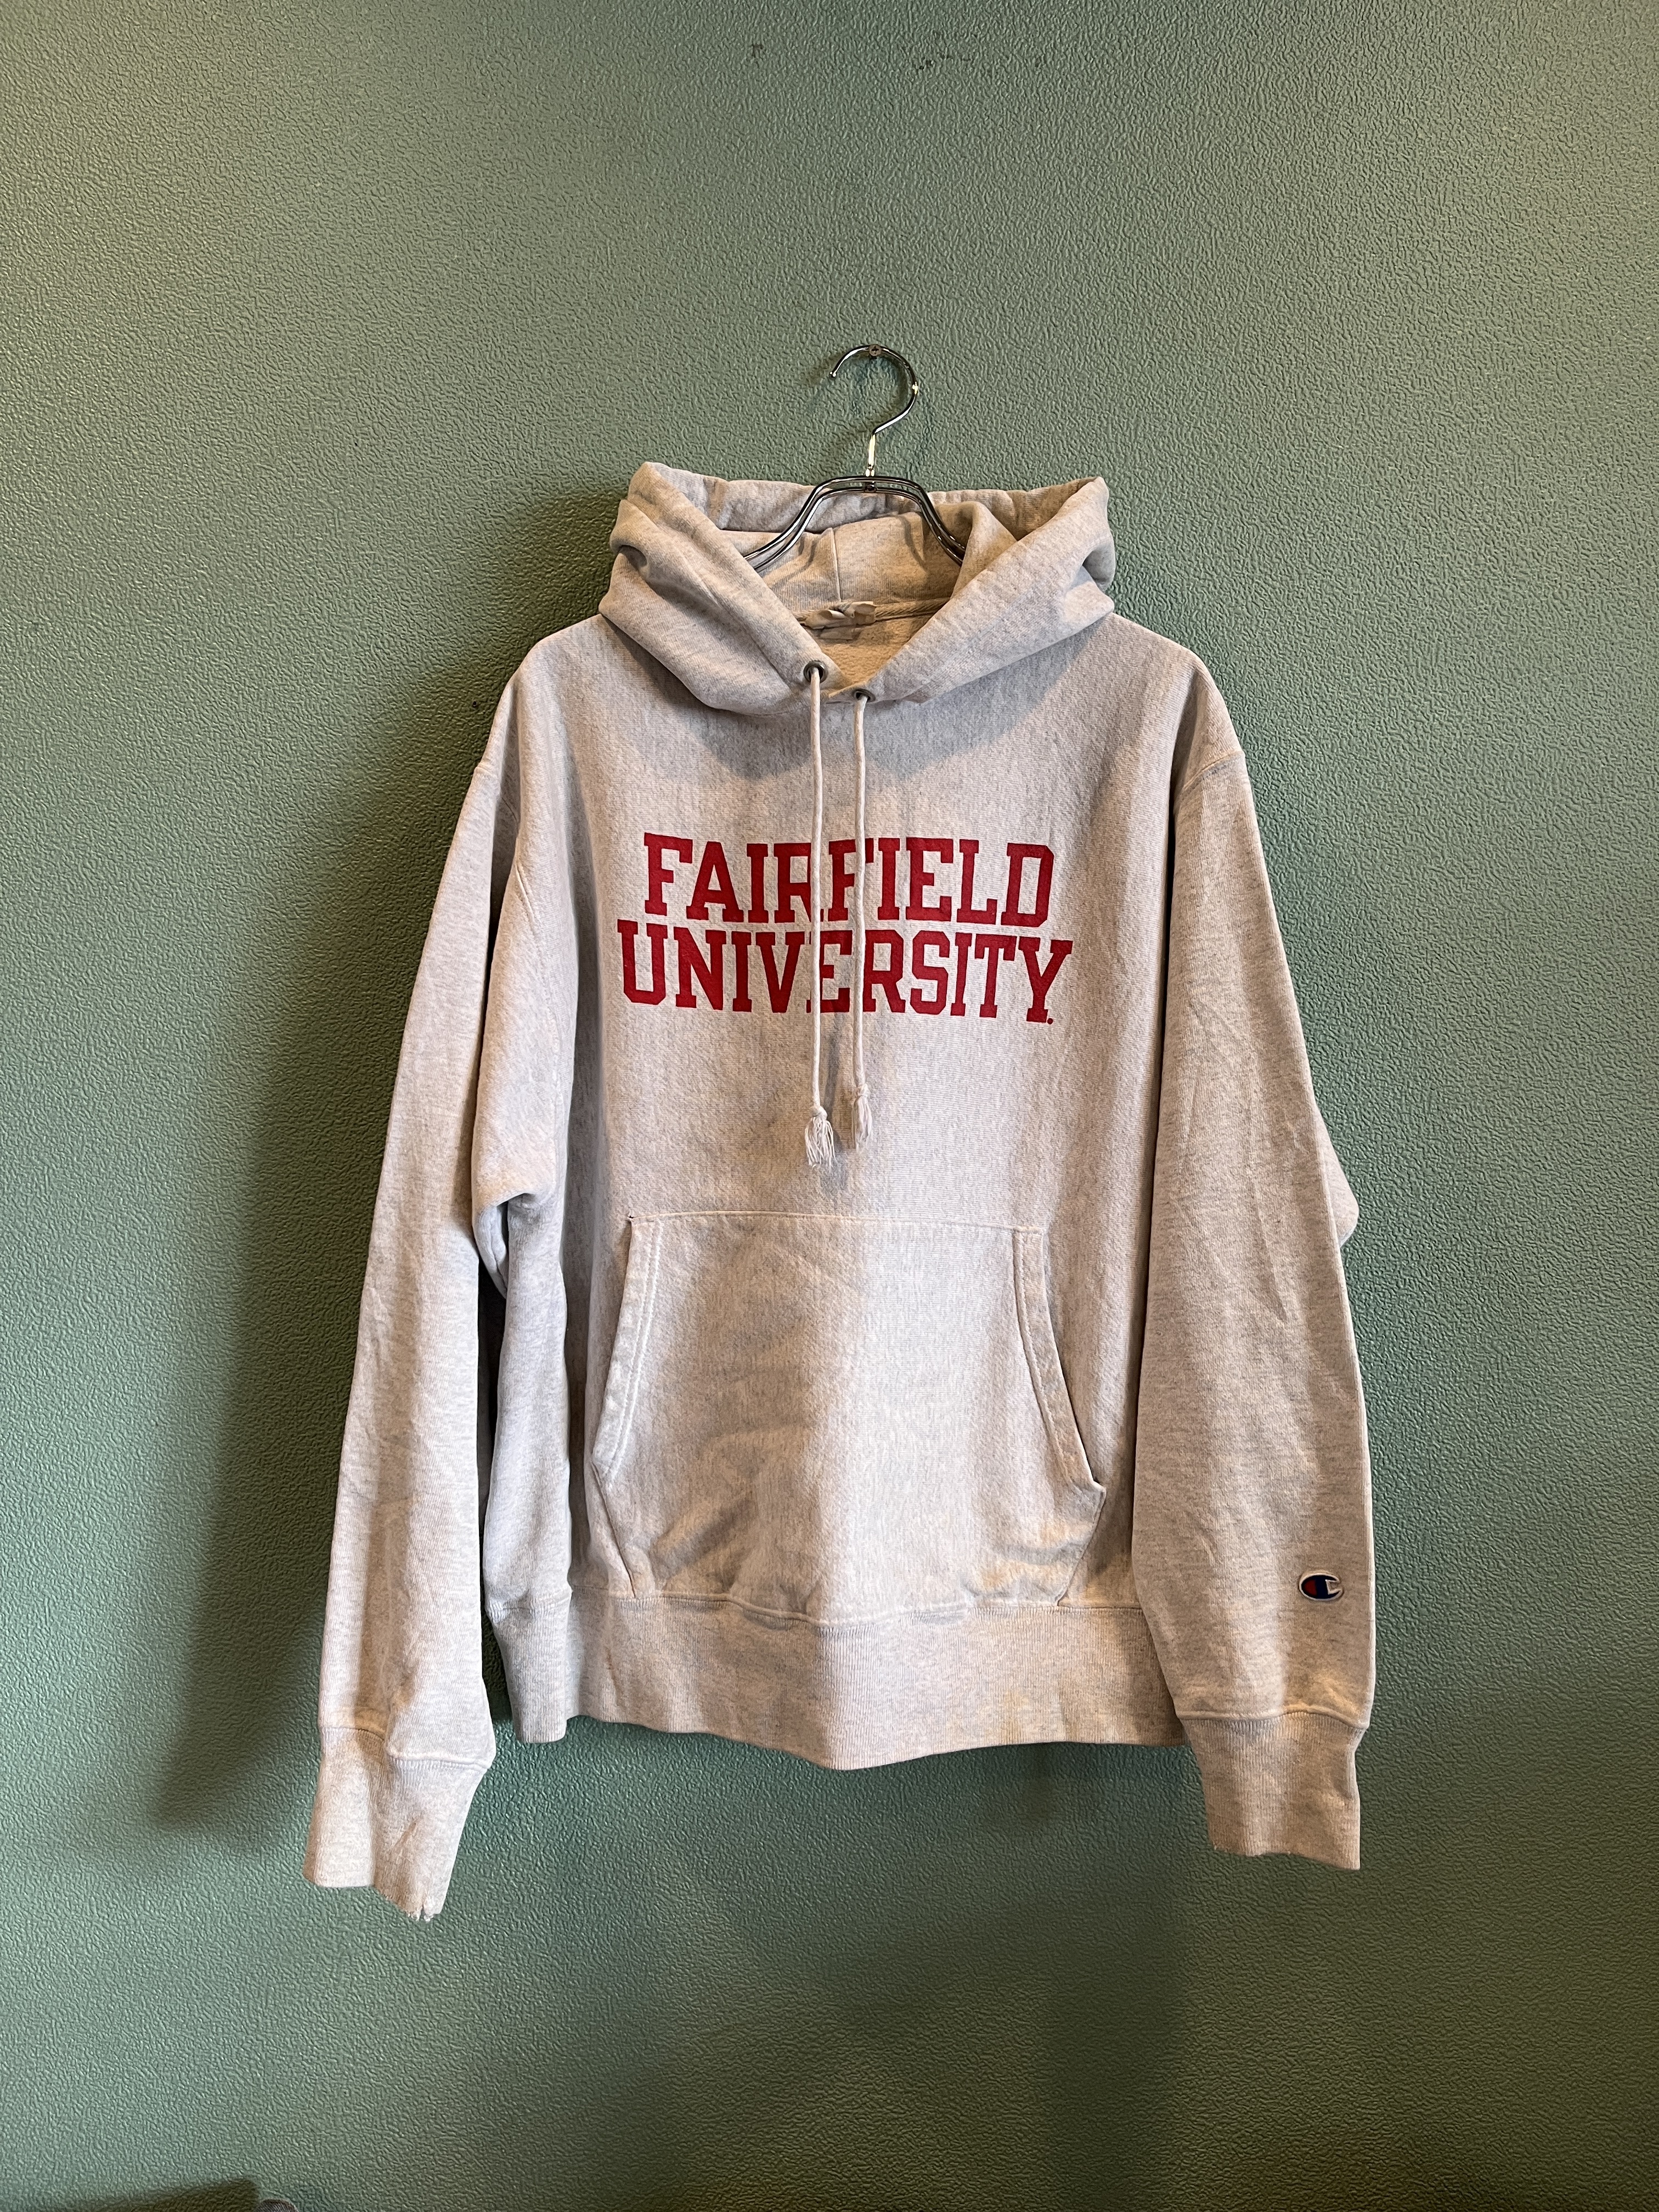 00's Champion Reverse Weave Fairfield University Hoodie L 復刻 ...